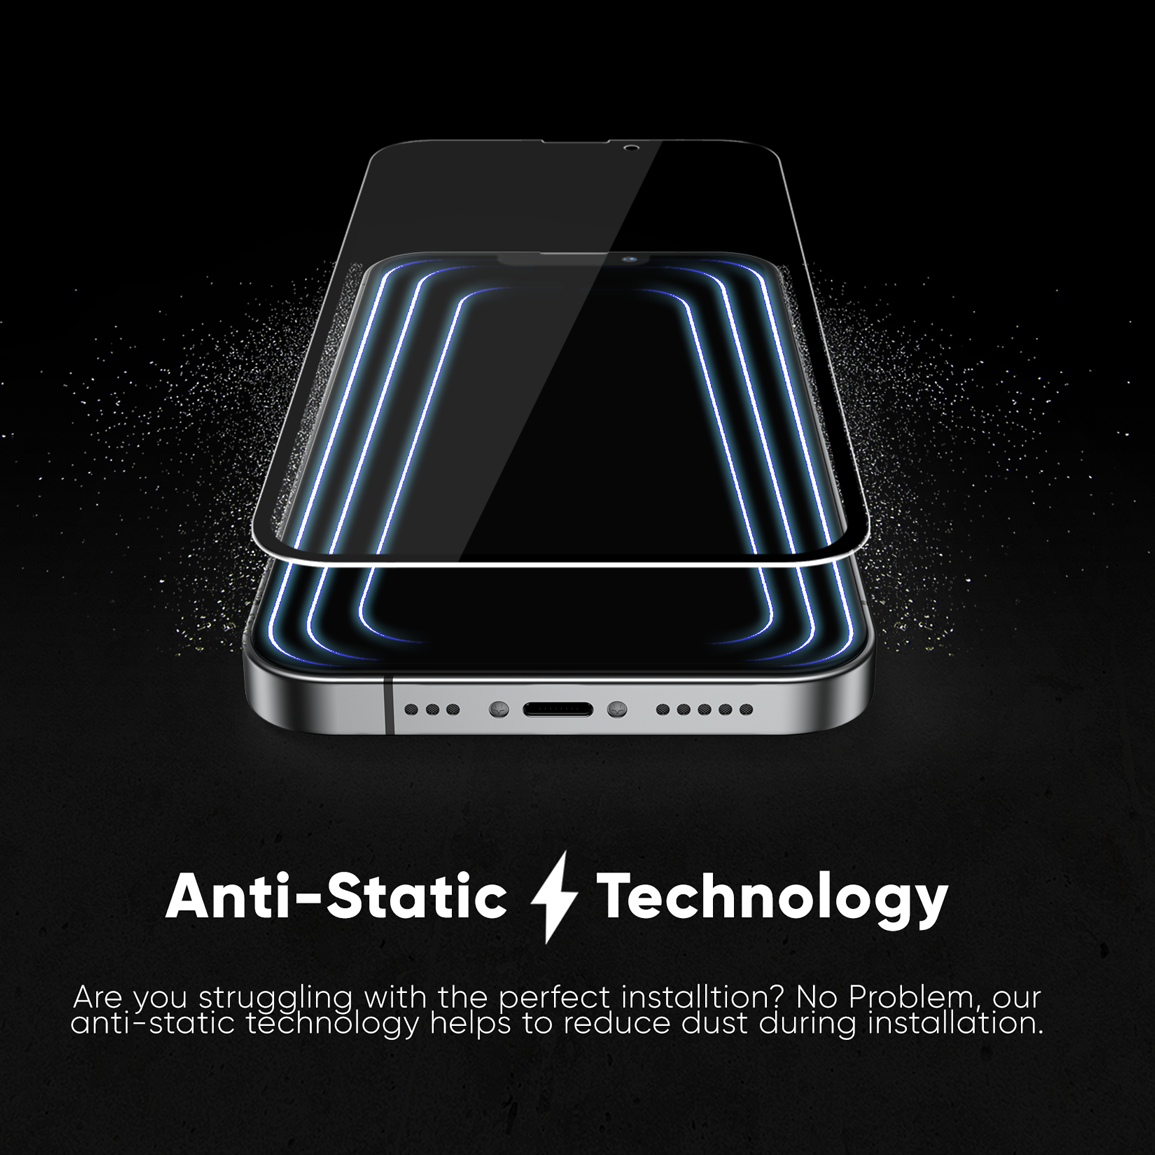 Belkin Anti-Glare Screen Protector for iPhone 13 | 13 Pro